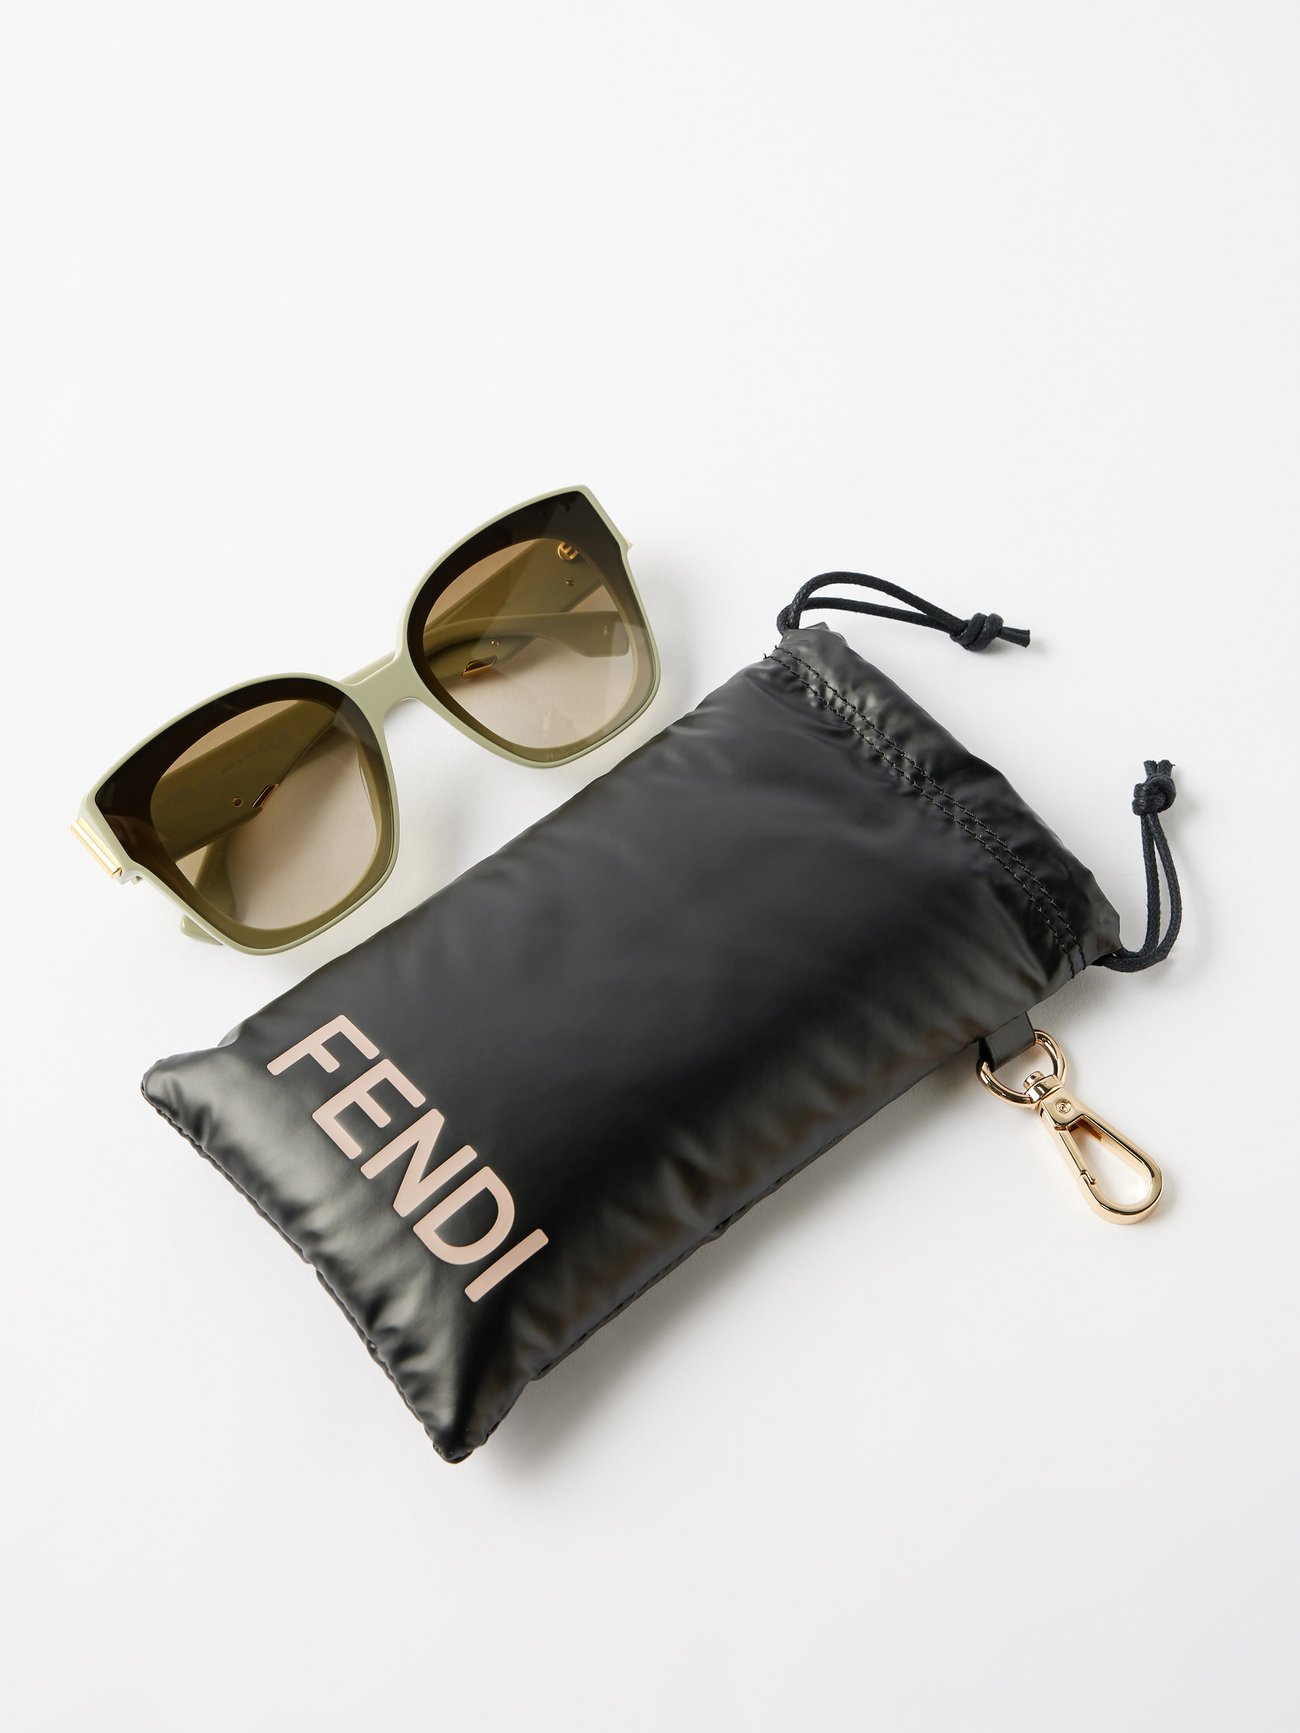 Fendi First oversized square acetate sunglasses